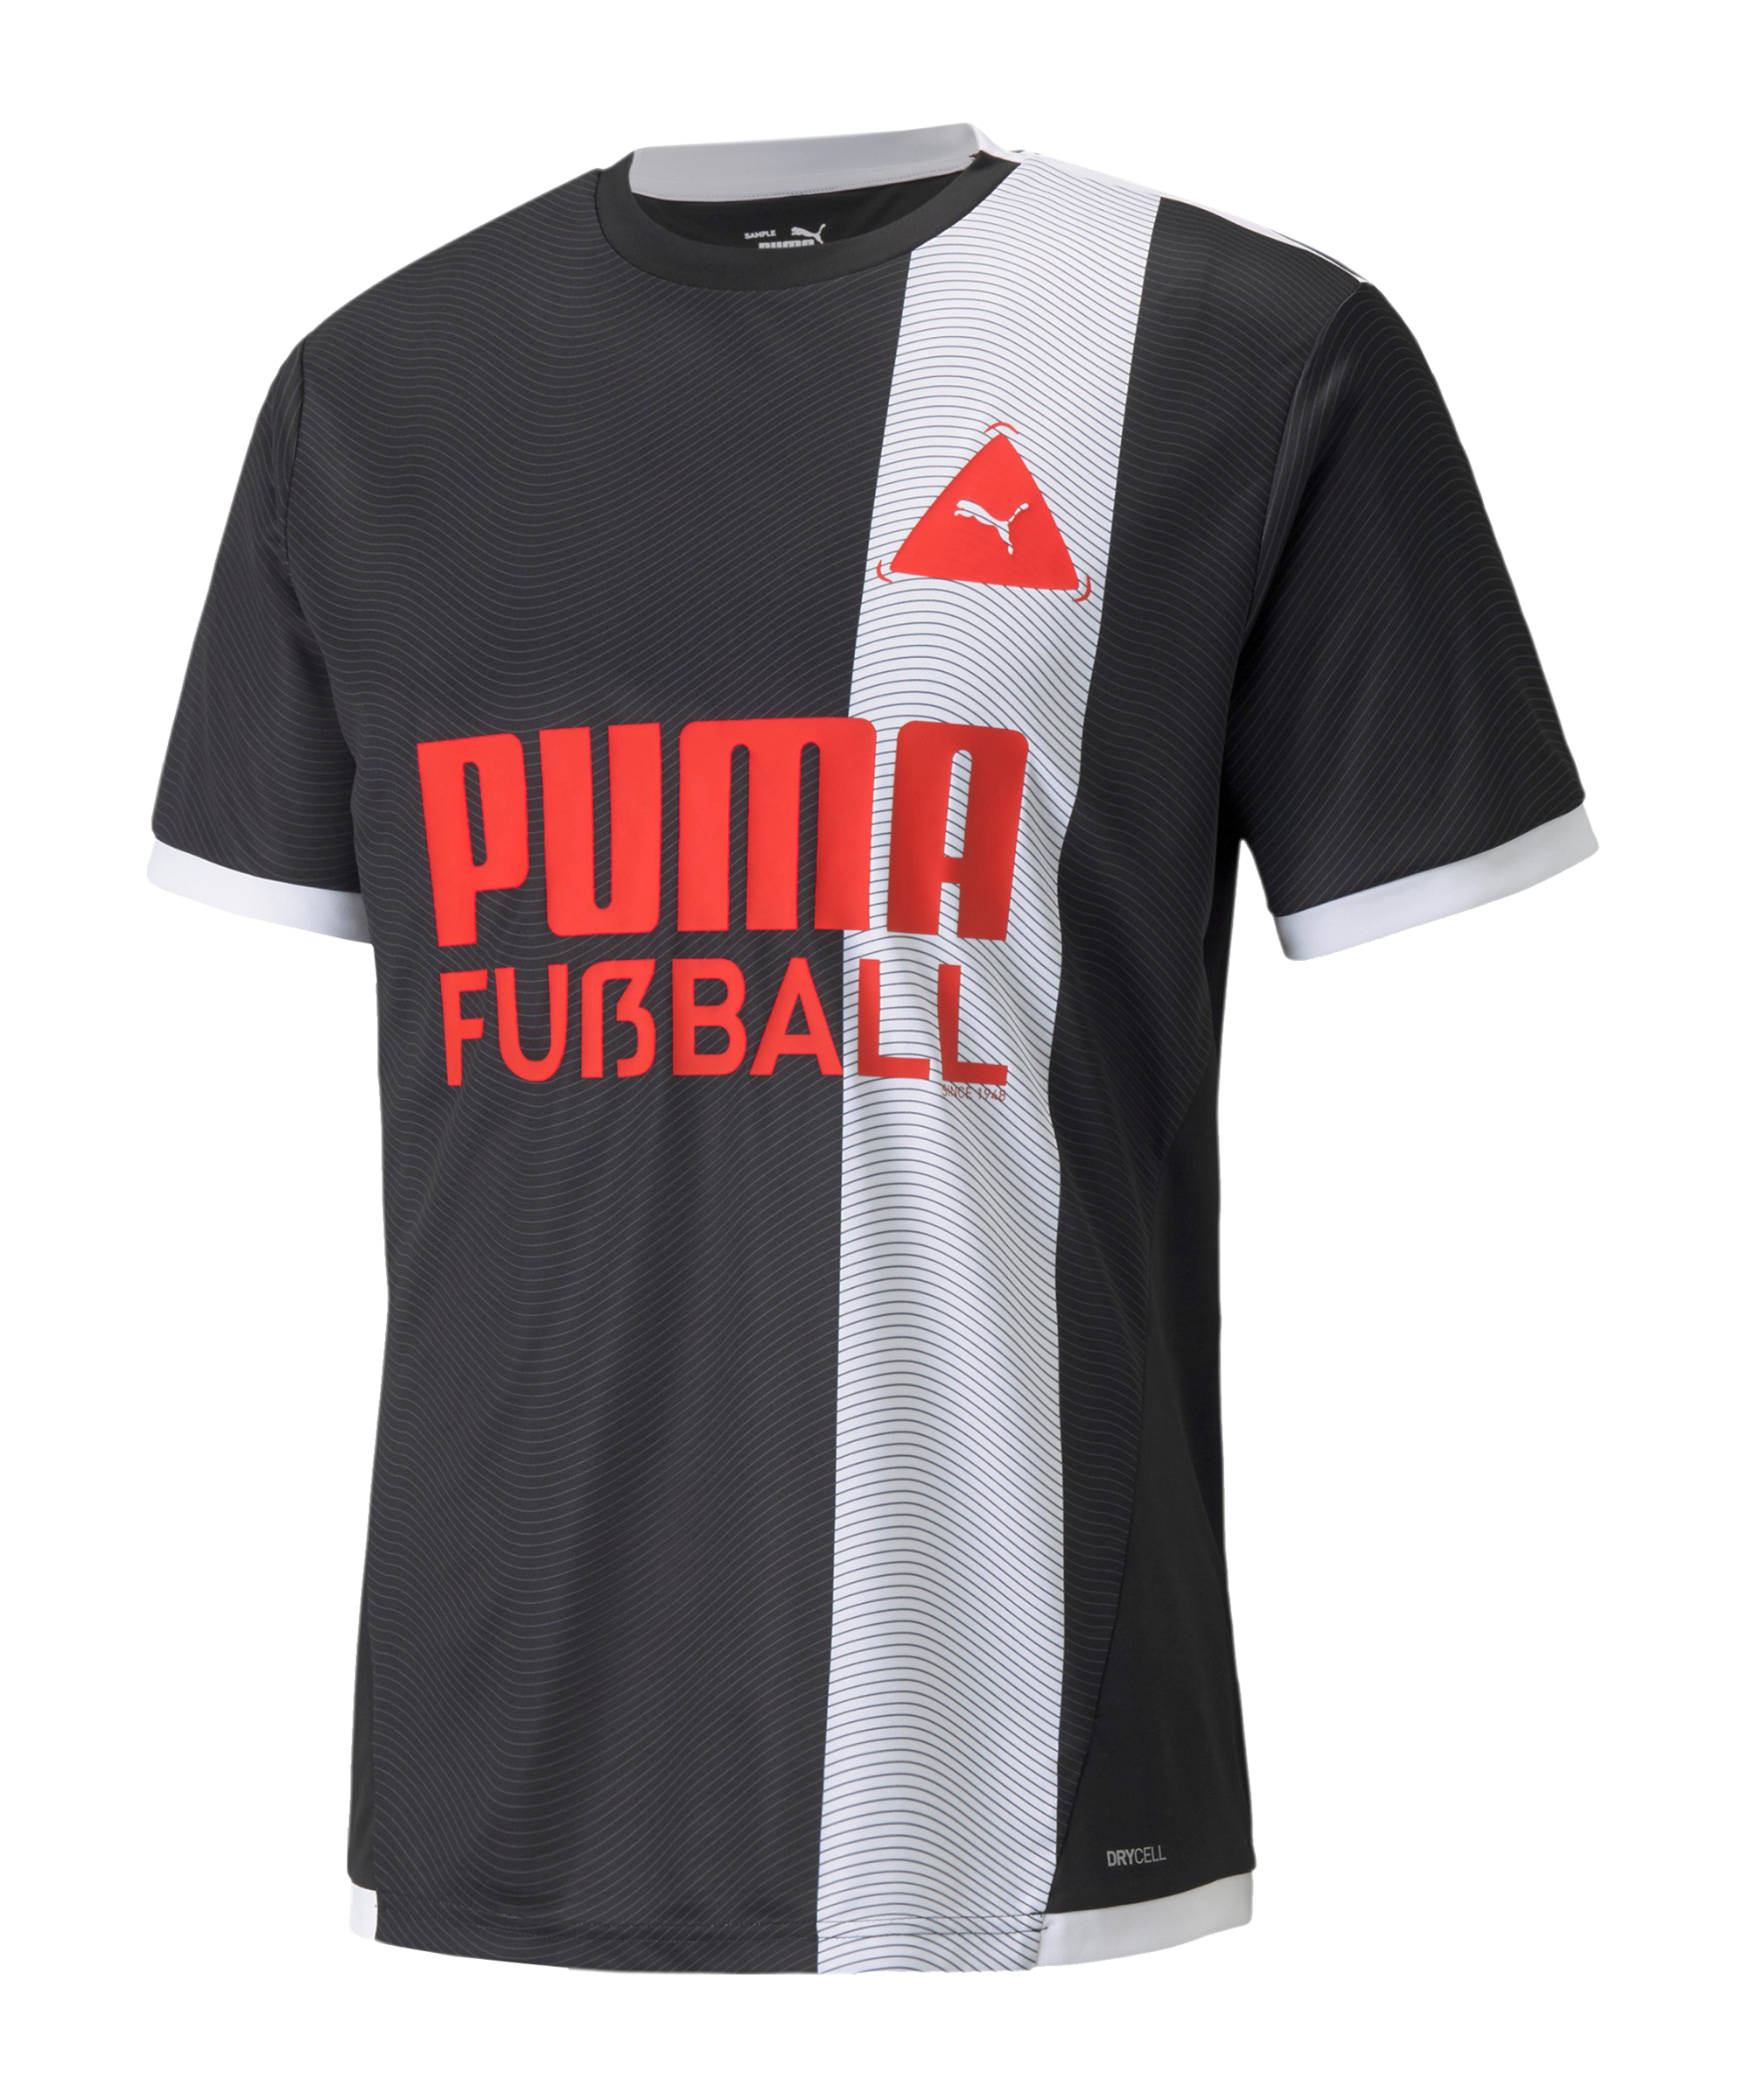 Bluza Puma FUßBALL PARK Jersey